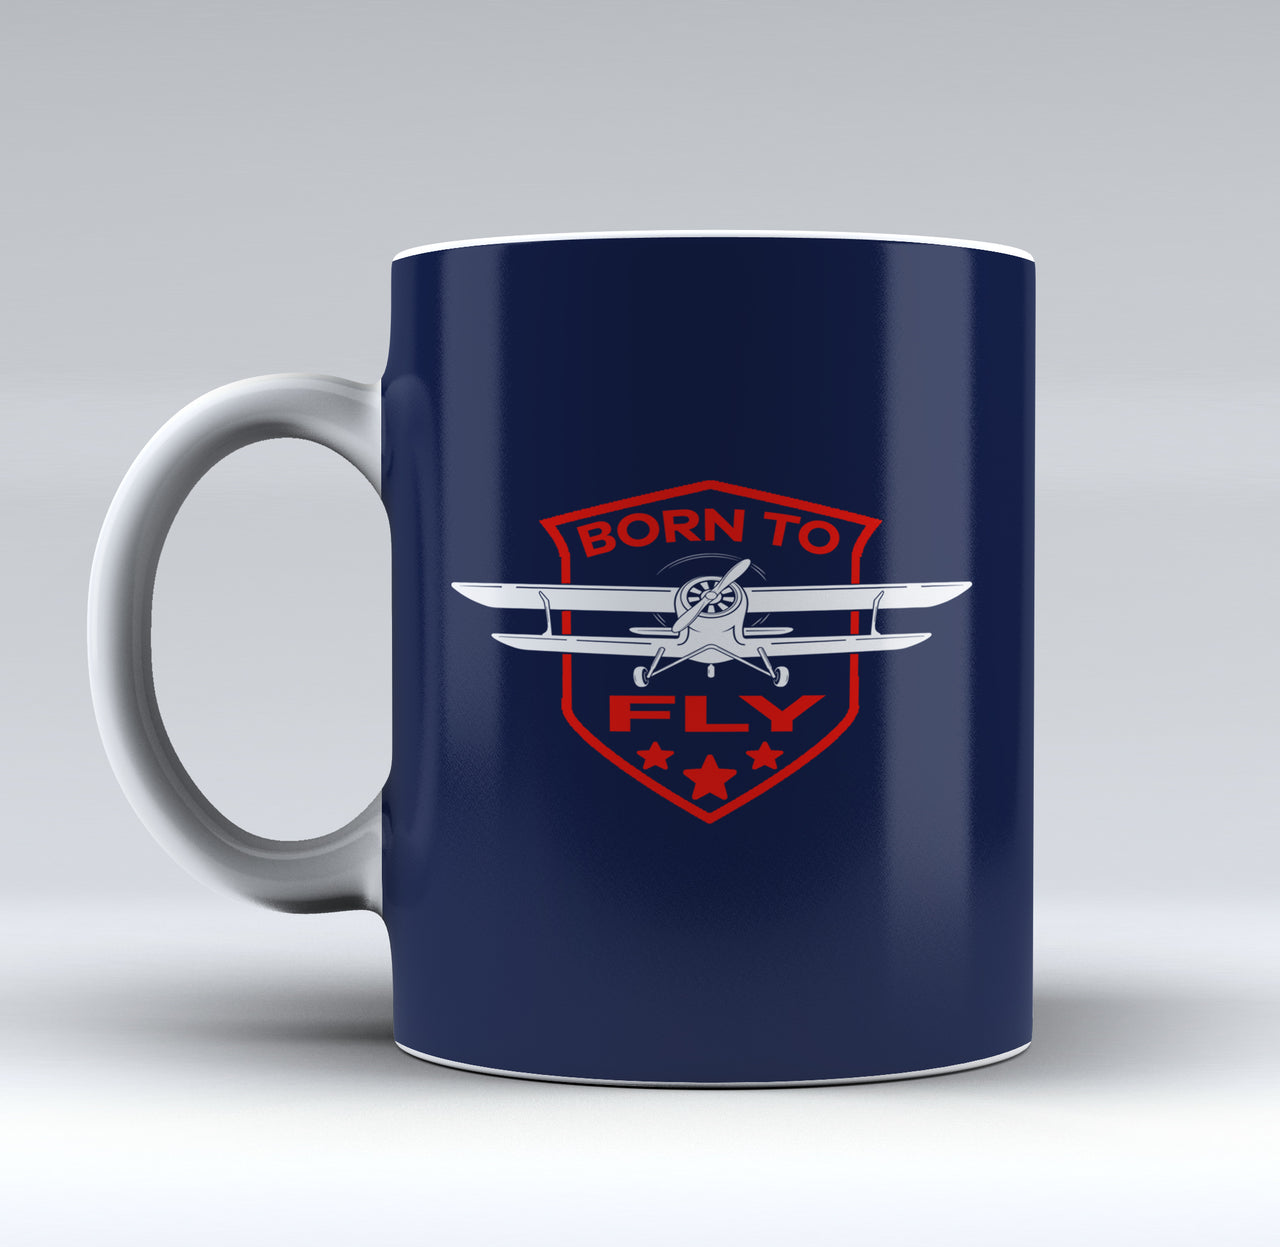 Born To Fly Designed Mugs